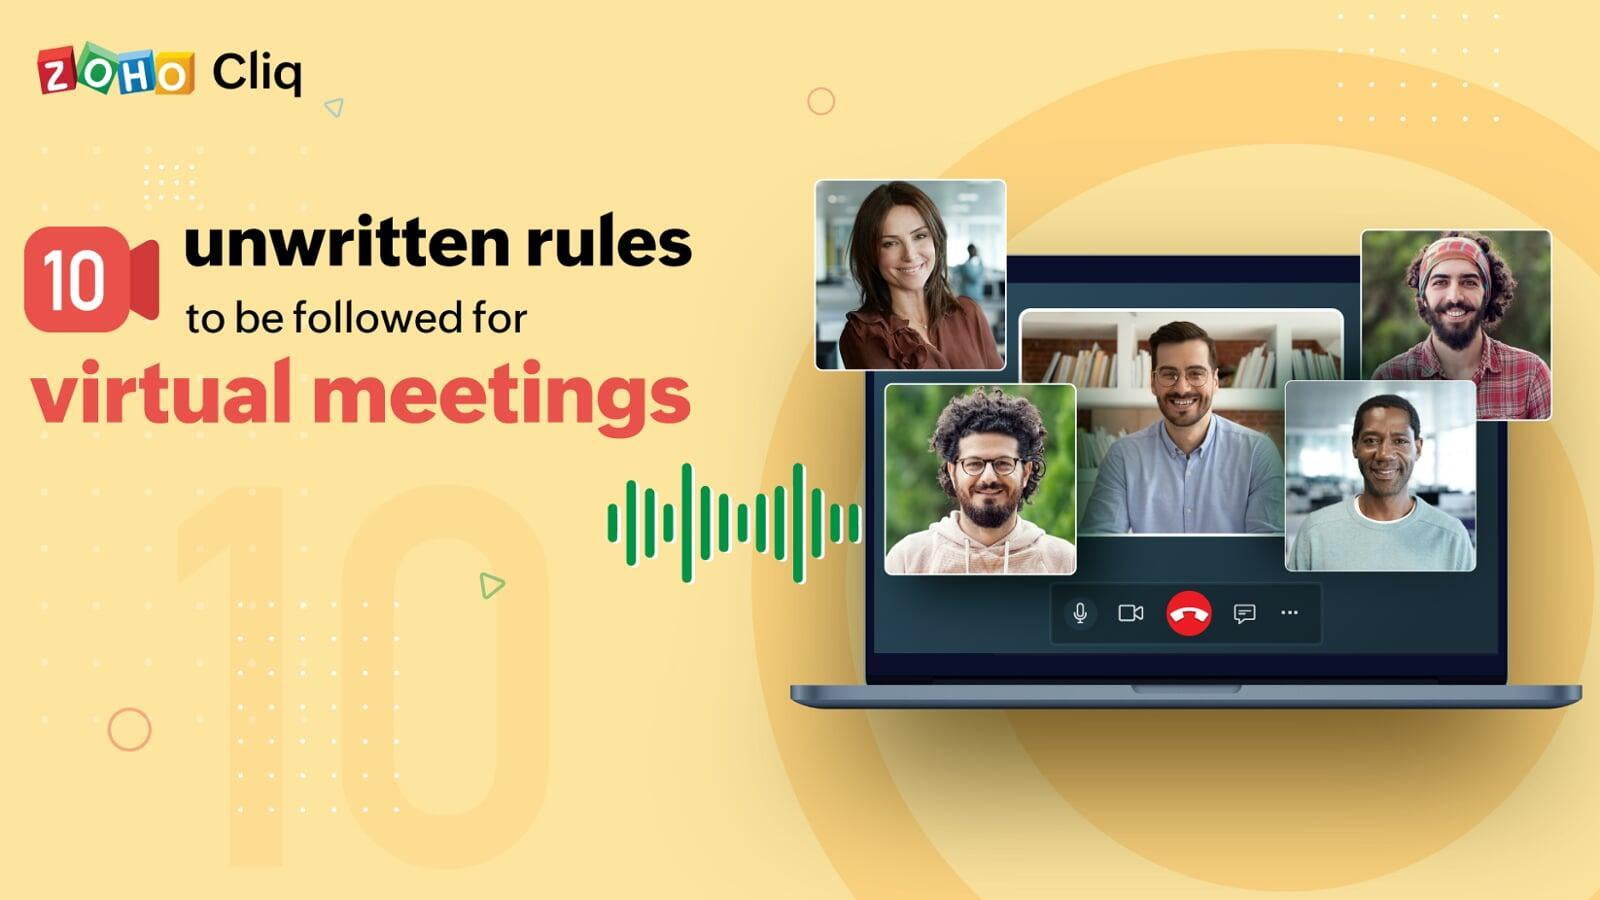 Ten unwritten rules for virtual meetings.